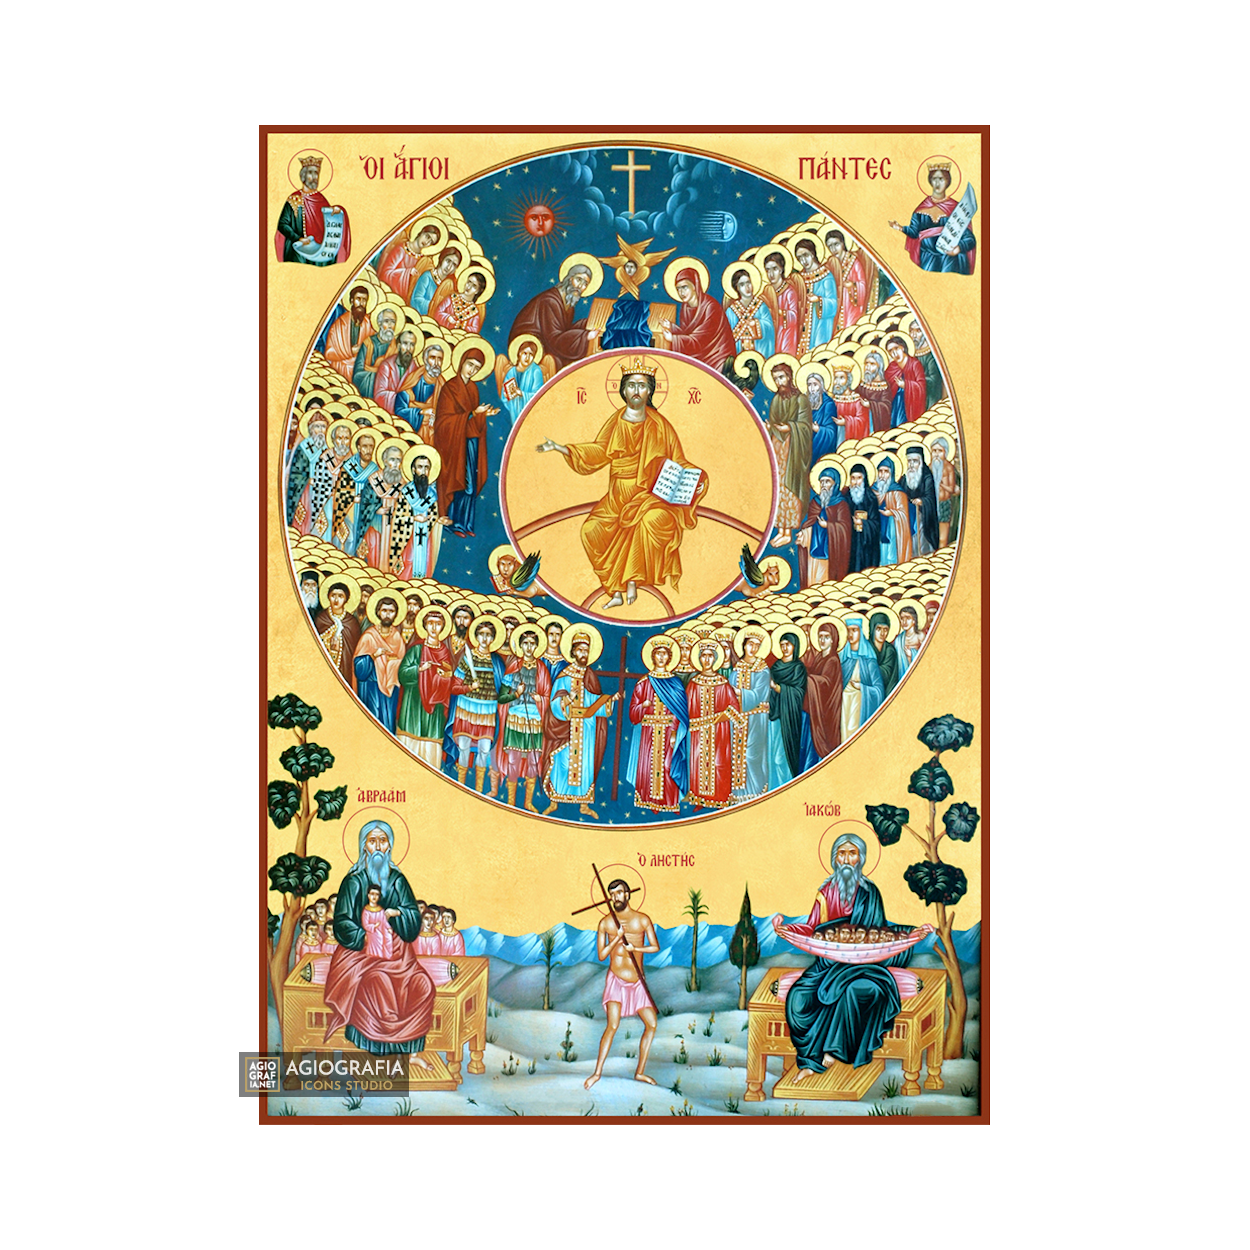 22k All Saints - Gold Leaf Background Christian Orthodox Icon